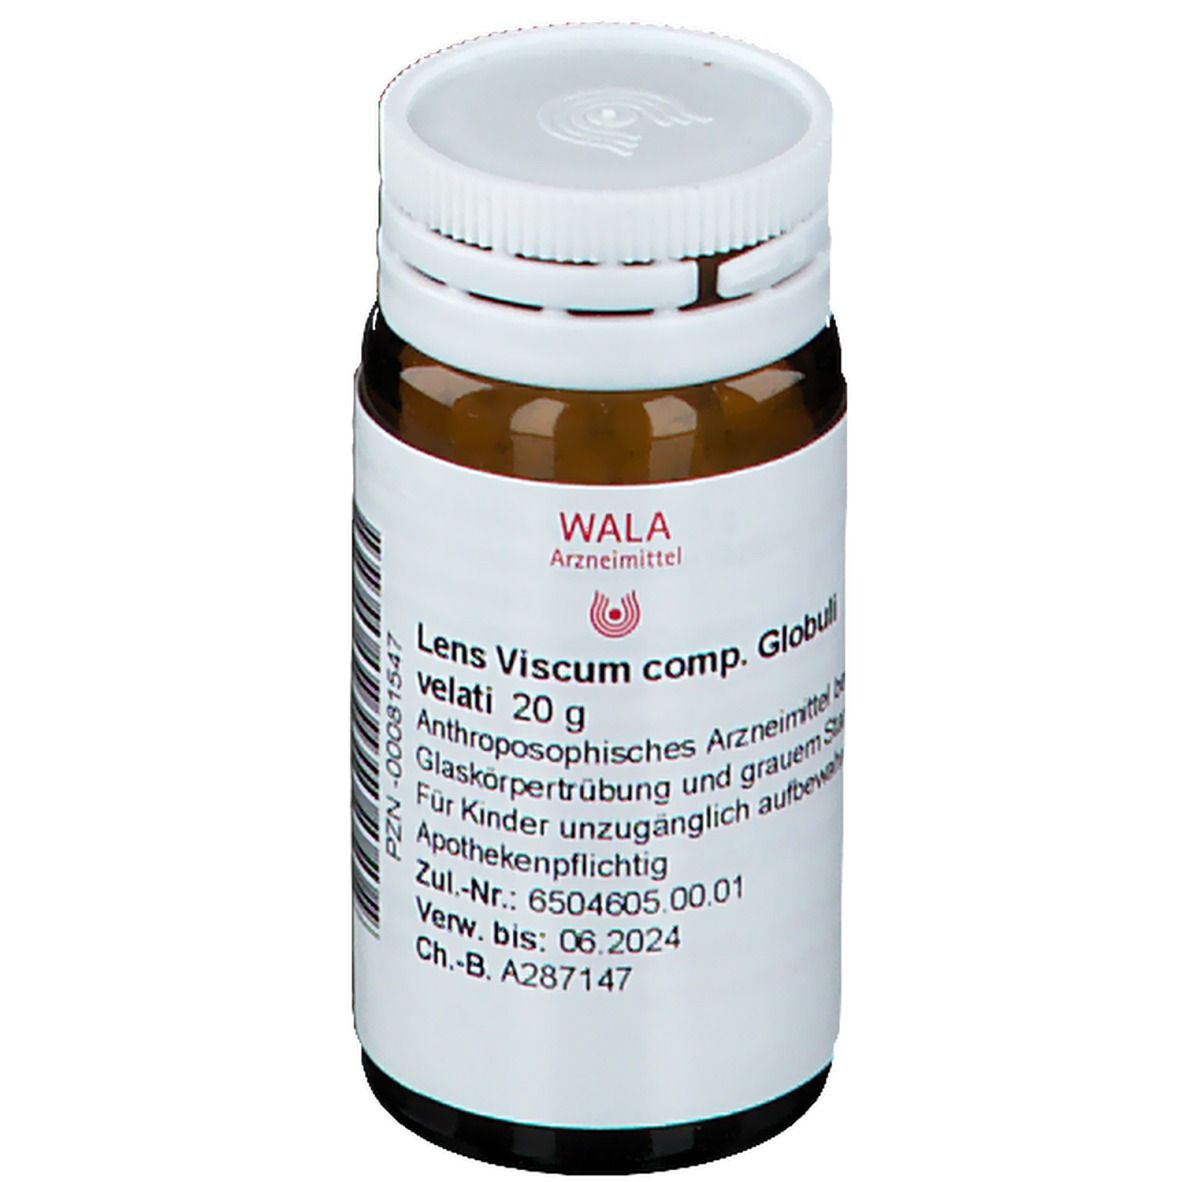 WALA® Lens Viscum comp. Globuli Velati